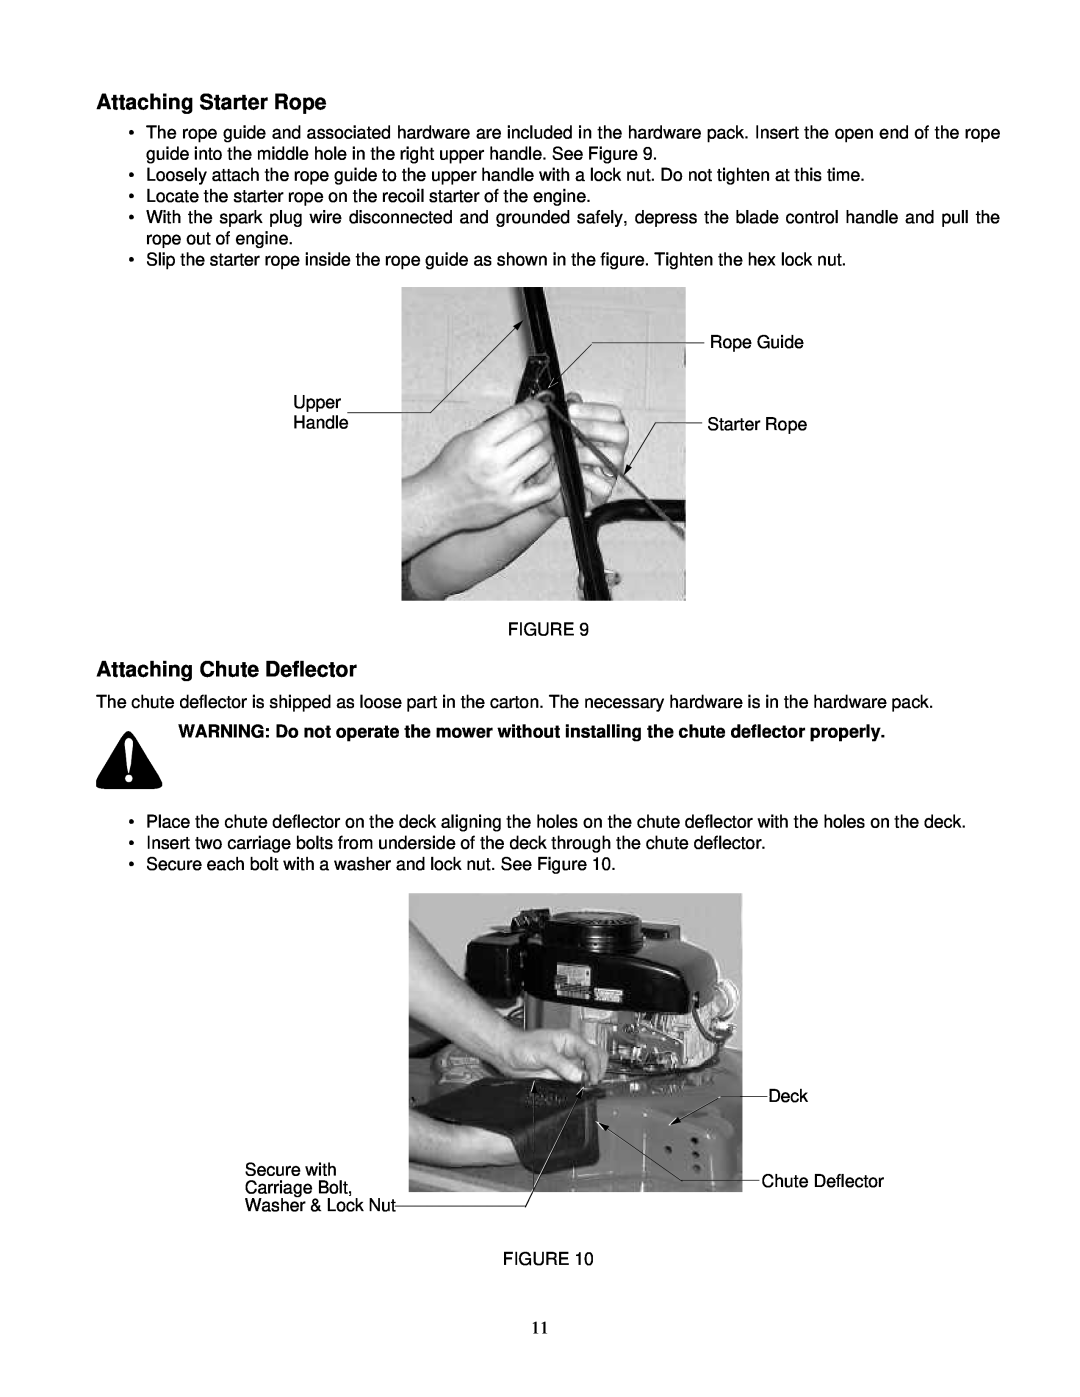 Yard Machines 570 manual Attaching Starter Rope, Attaching Chute Deflector 